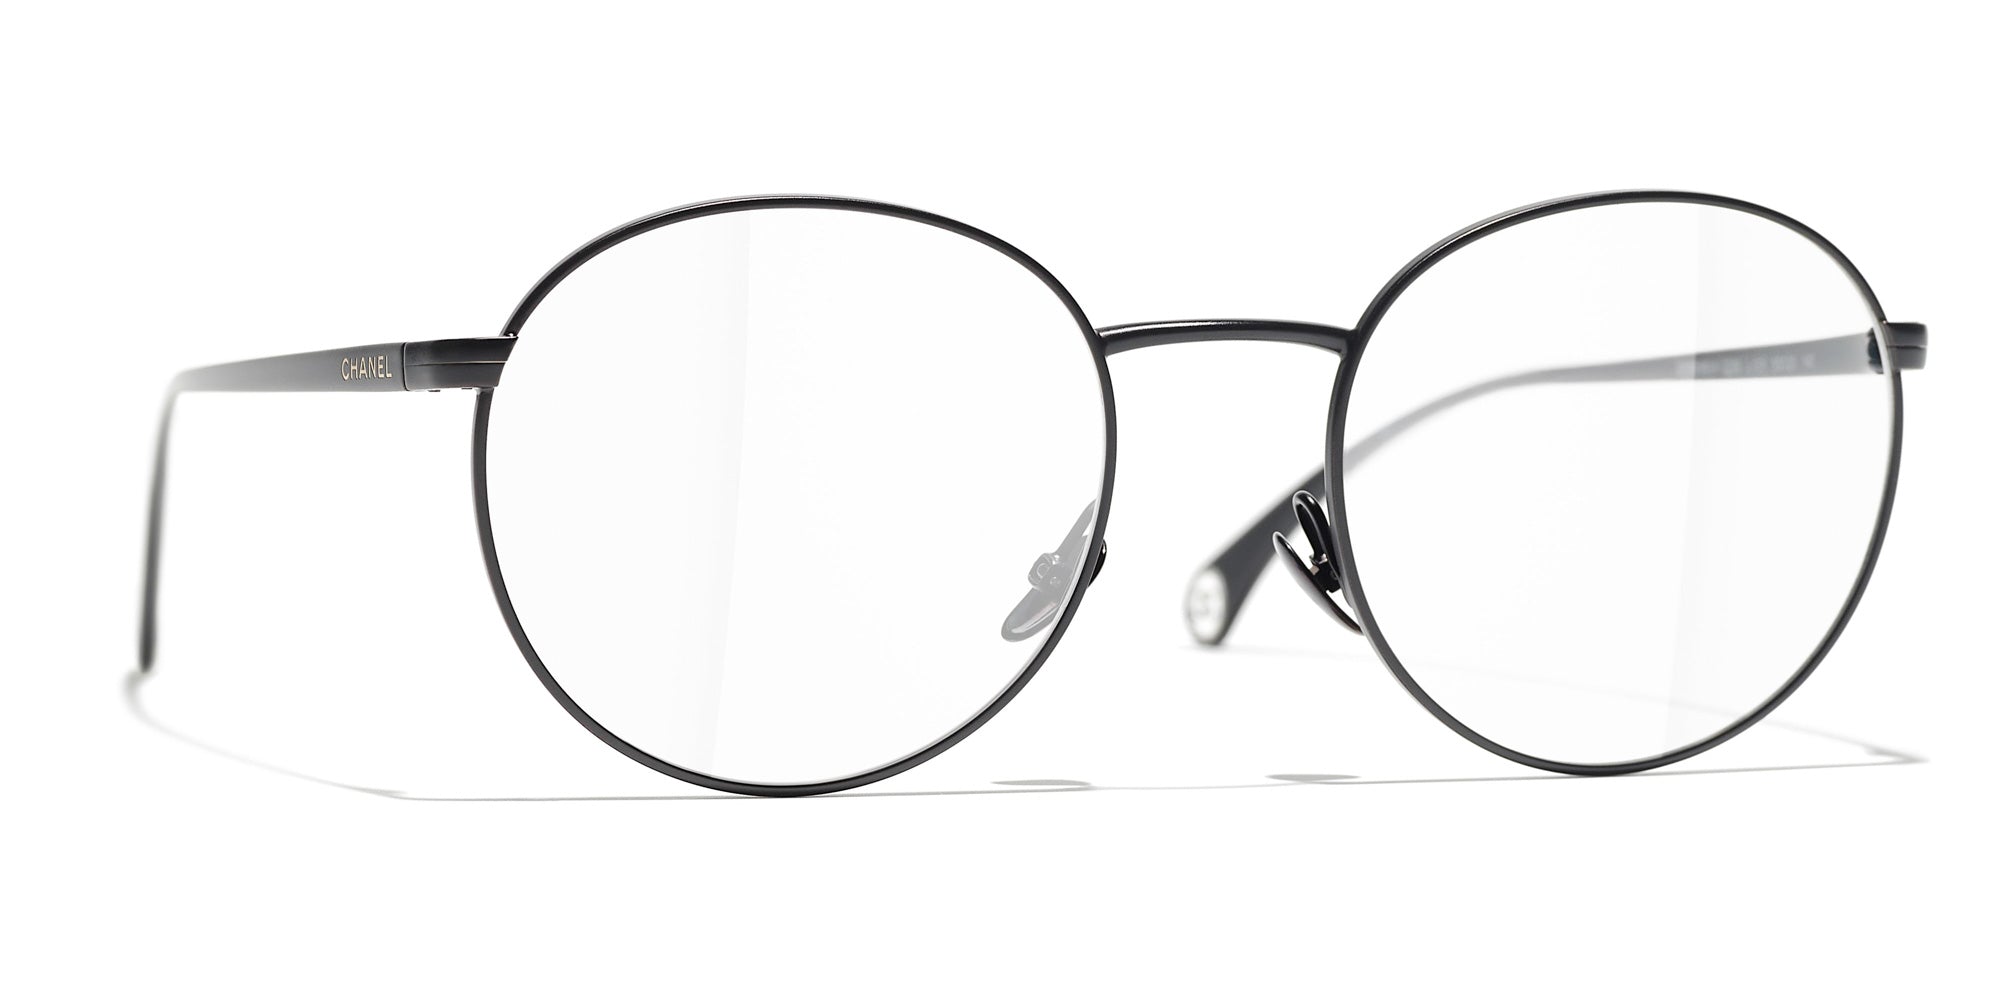 Chanel 2209 Glasses Black Oval Women